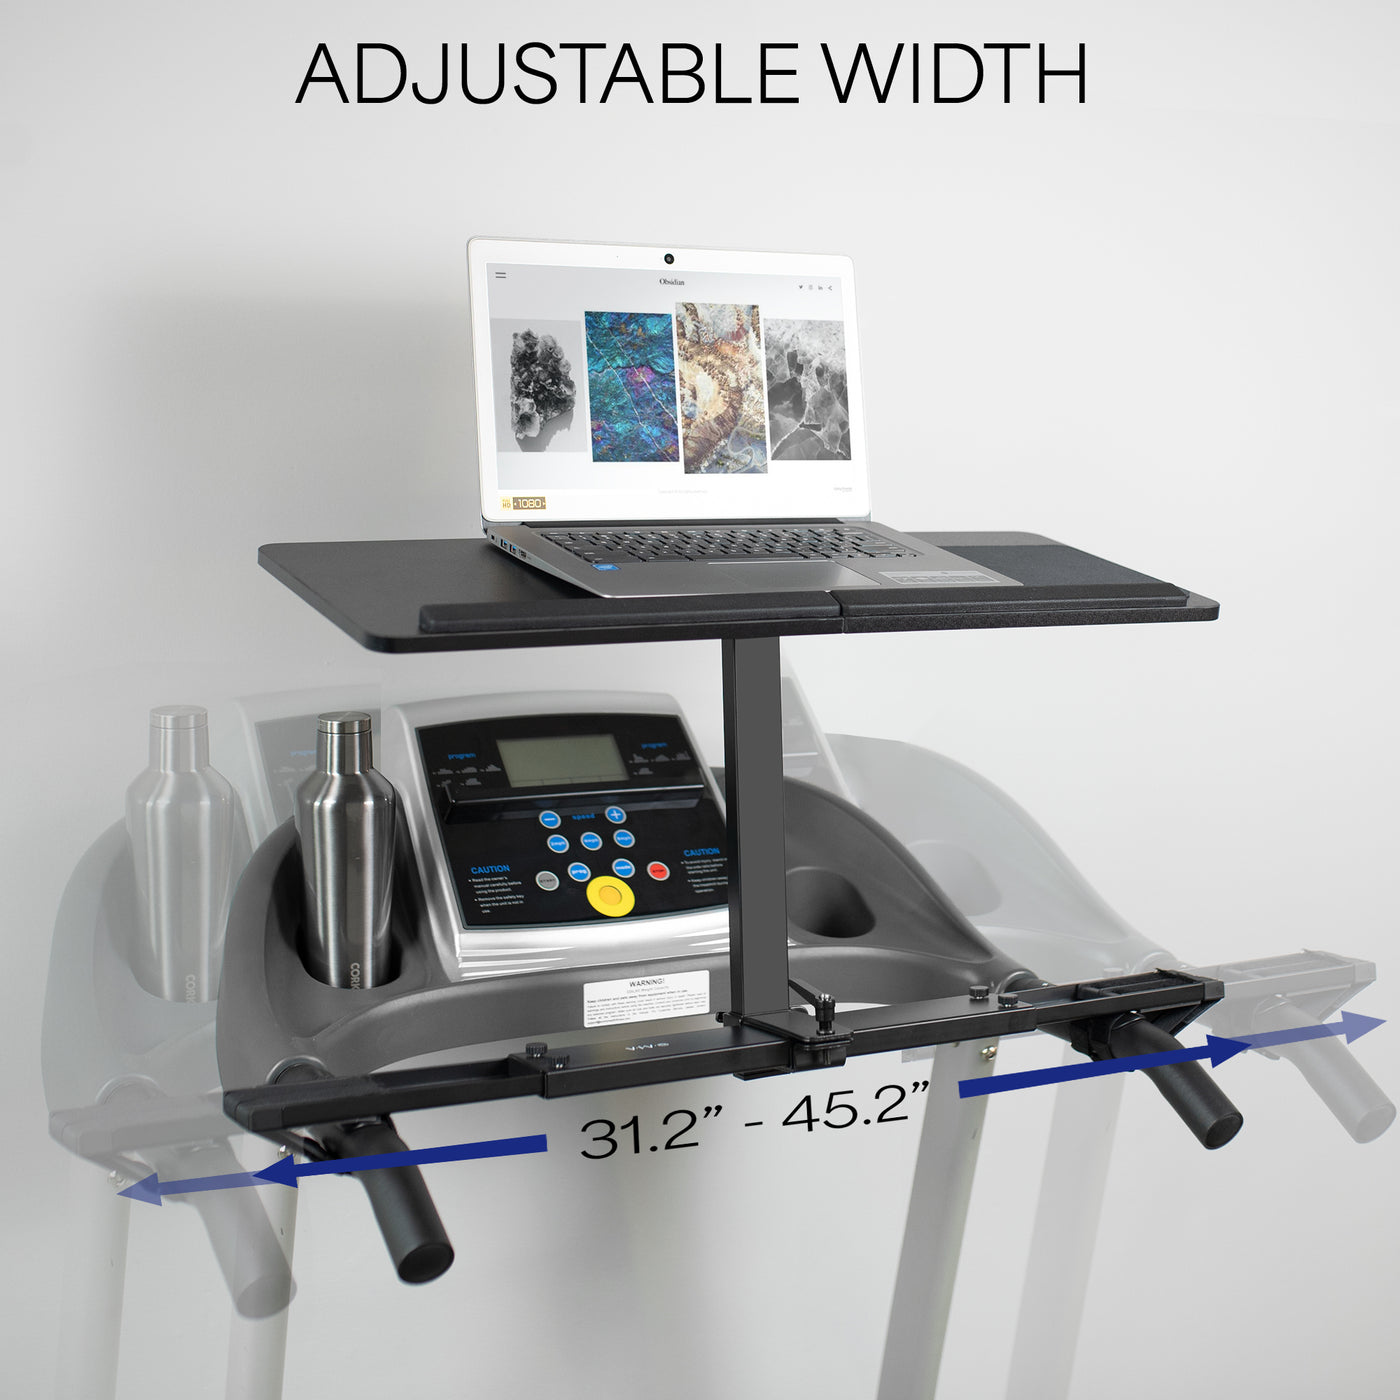 Laptop desk riser platform with adjustable width for a treadmill.